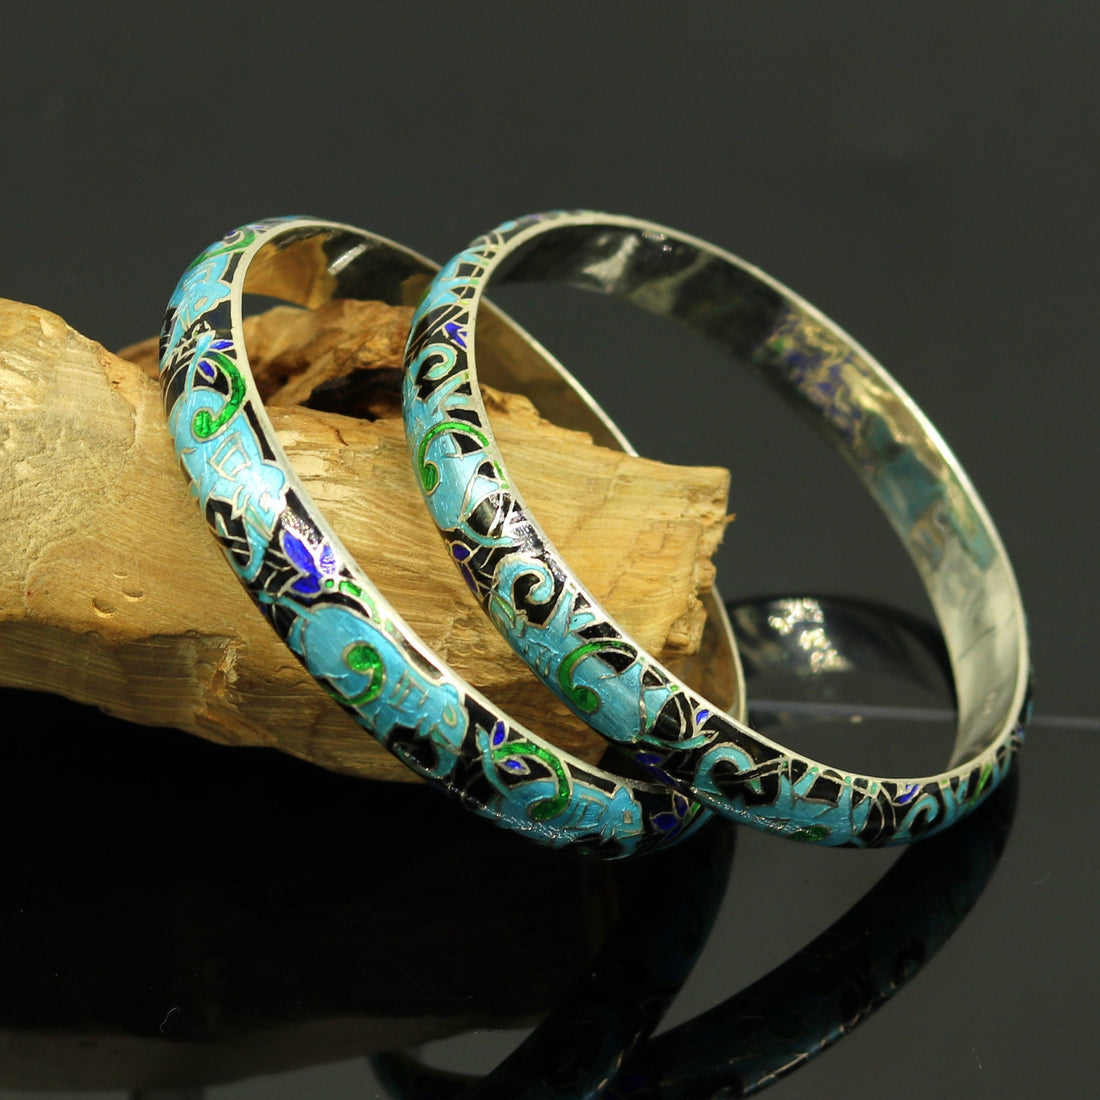 925 sterling silver handmade enamel elephant work bridesmaid bangle bracelet for girl's women's personalized gifting tribal jewelry nba84 - TRIBAL ORNAMENTS